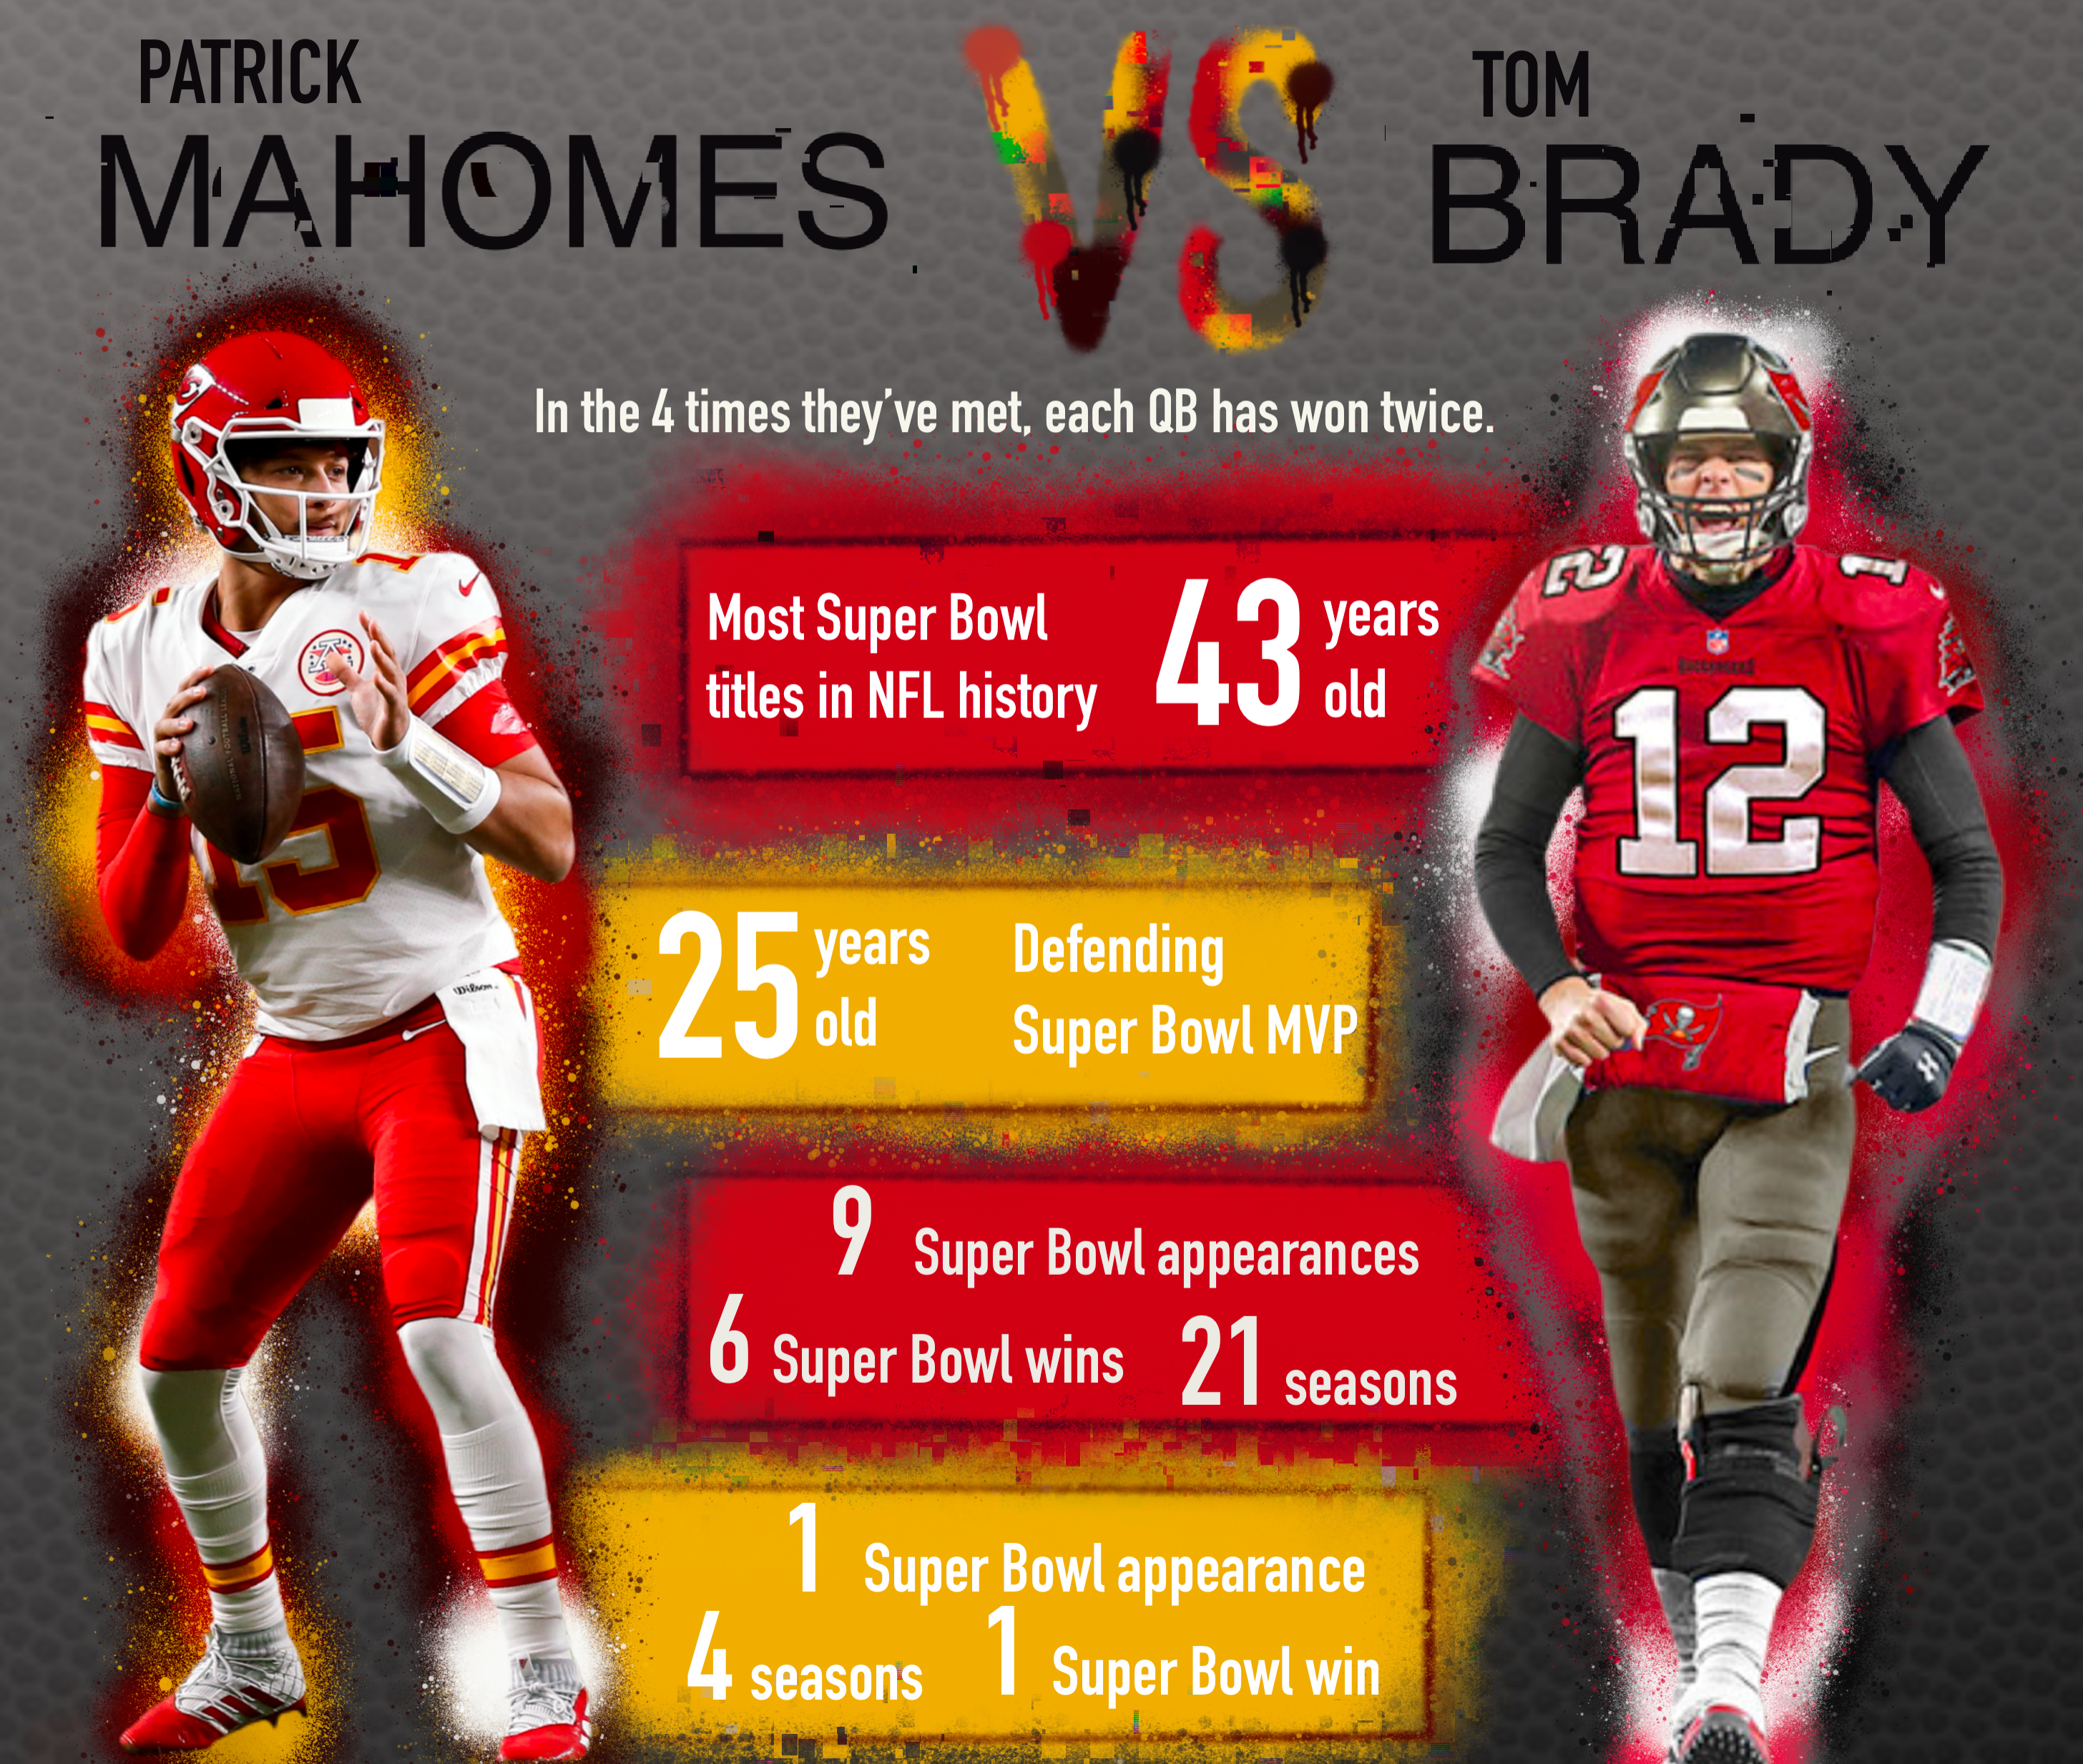 Tom Brady vs Patrick Mahomes: The stats behind the starring QBs, NFL News